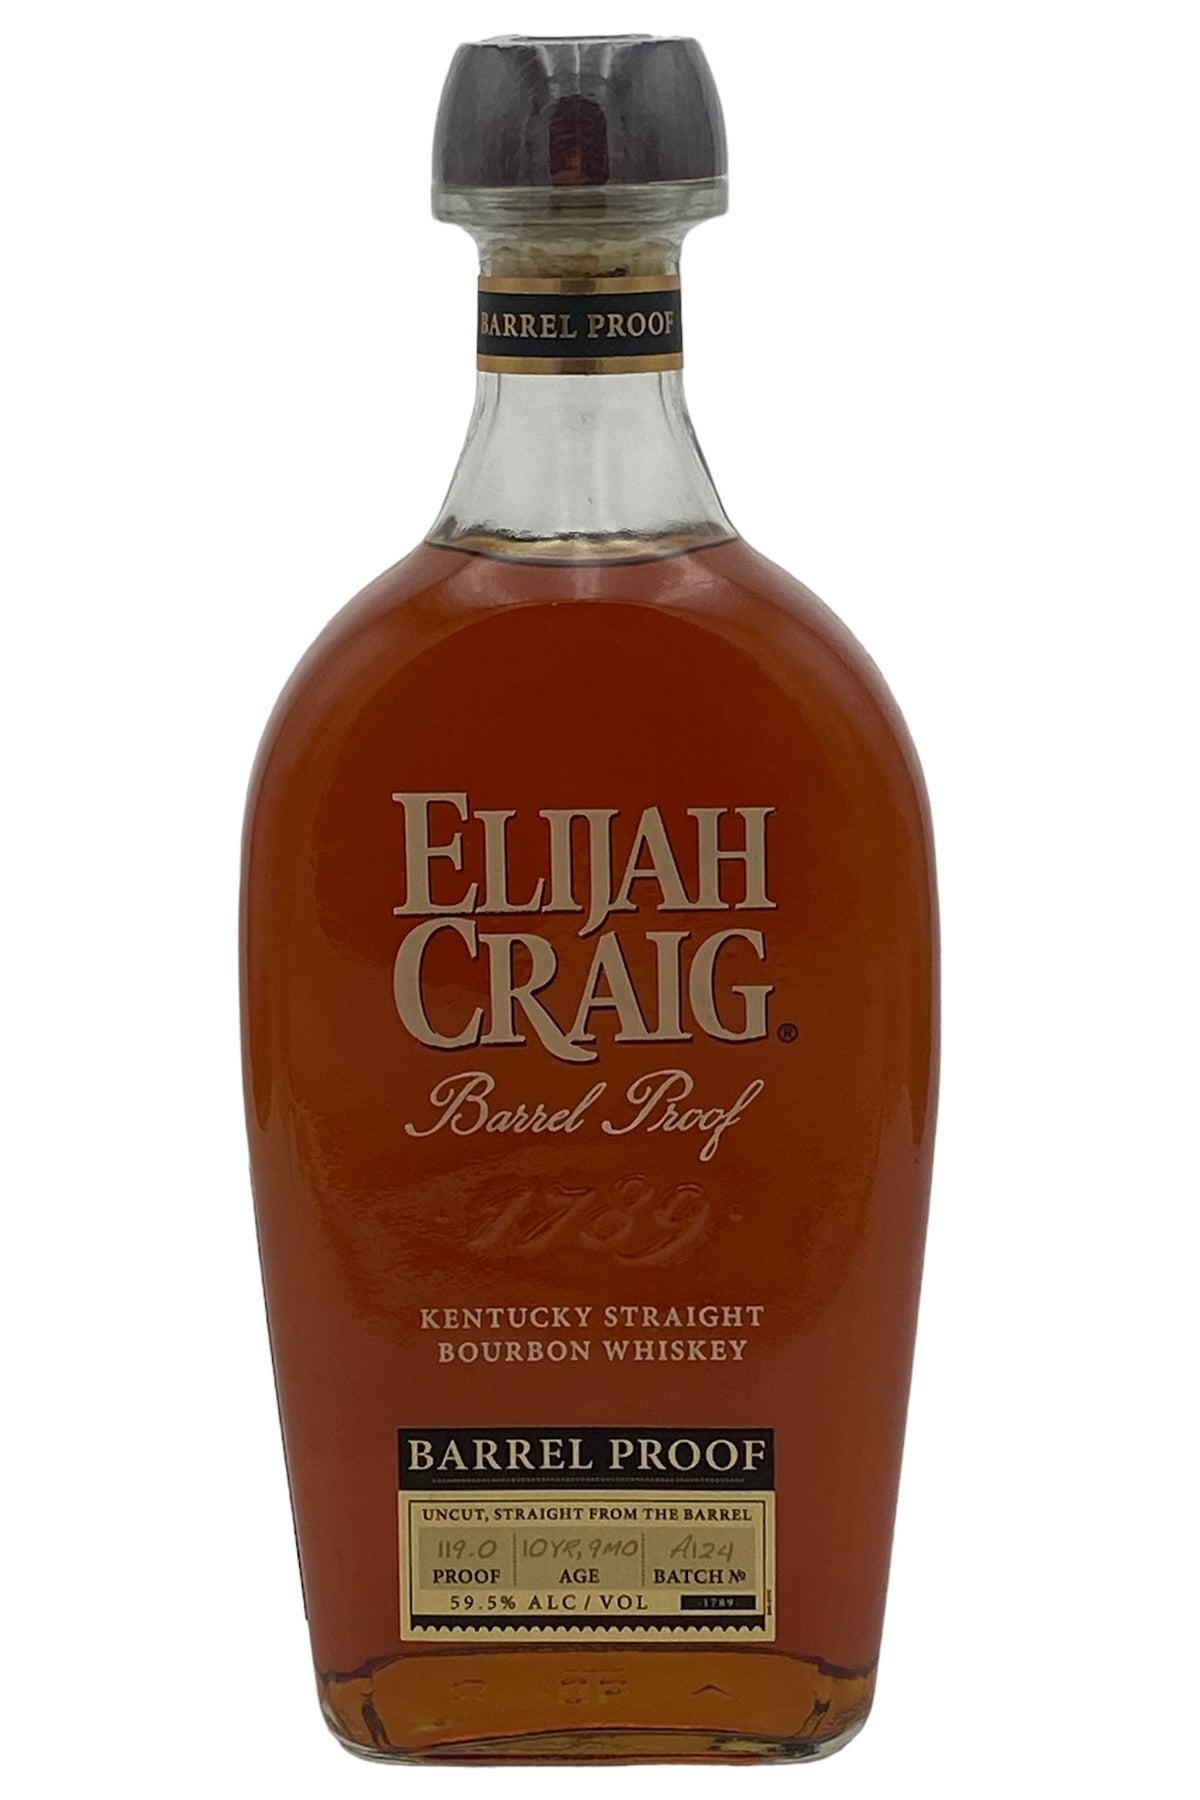 Elijah Craig Barrel Proof (Batch A124) Kentucky Straight Bourbon Whiskey